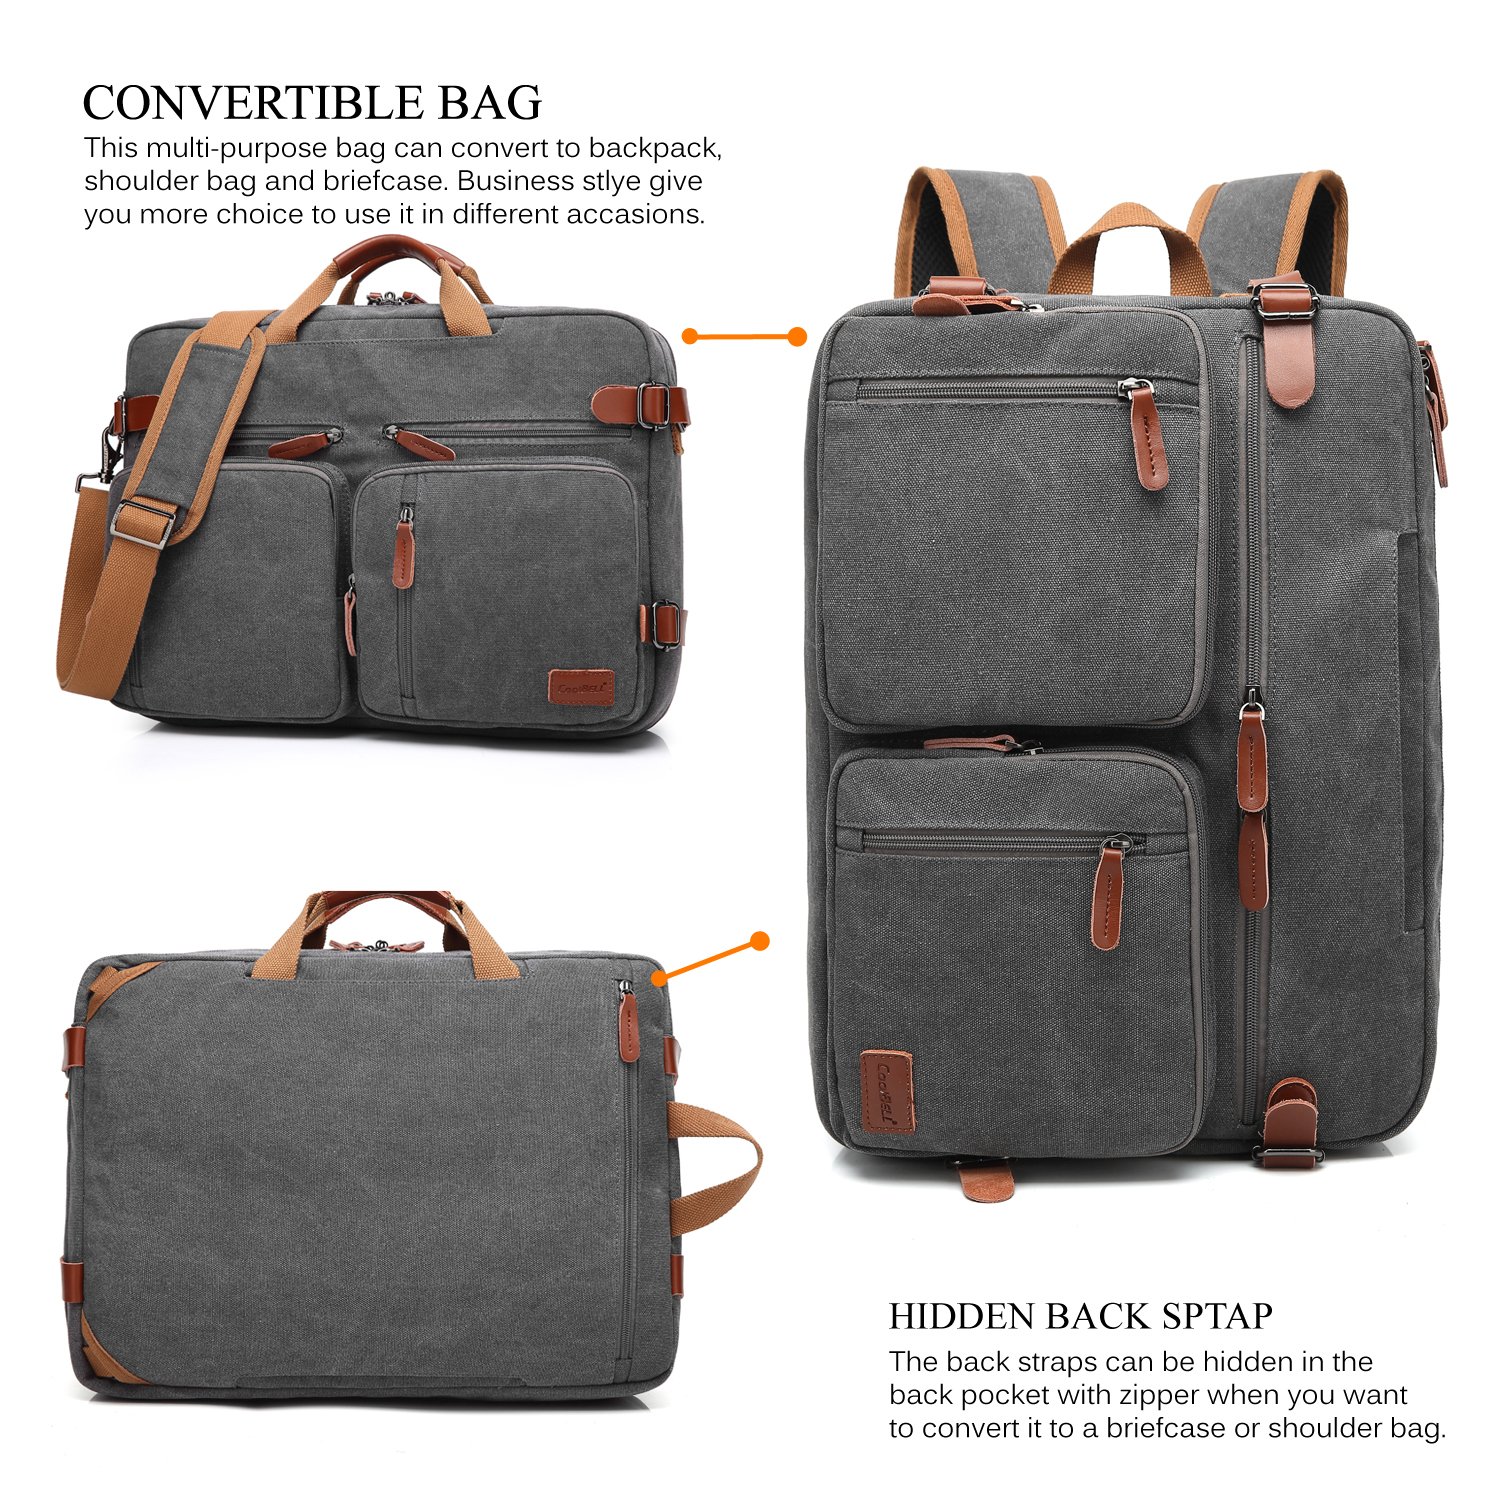 CoolBELL Convertible Backpack Messenger Shoulder Bag Laptop Case Business Briefcase Multi-Functional Travel Handbag Fits 17.3 Inch Laptop for Men/Women (Canvas Dark Grey)